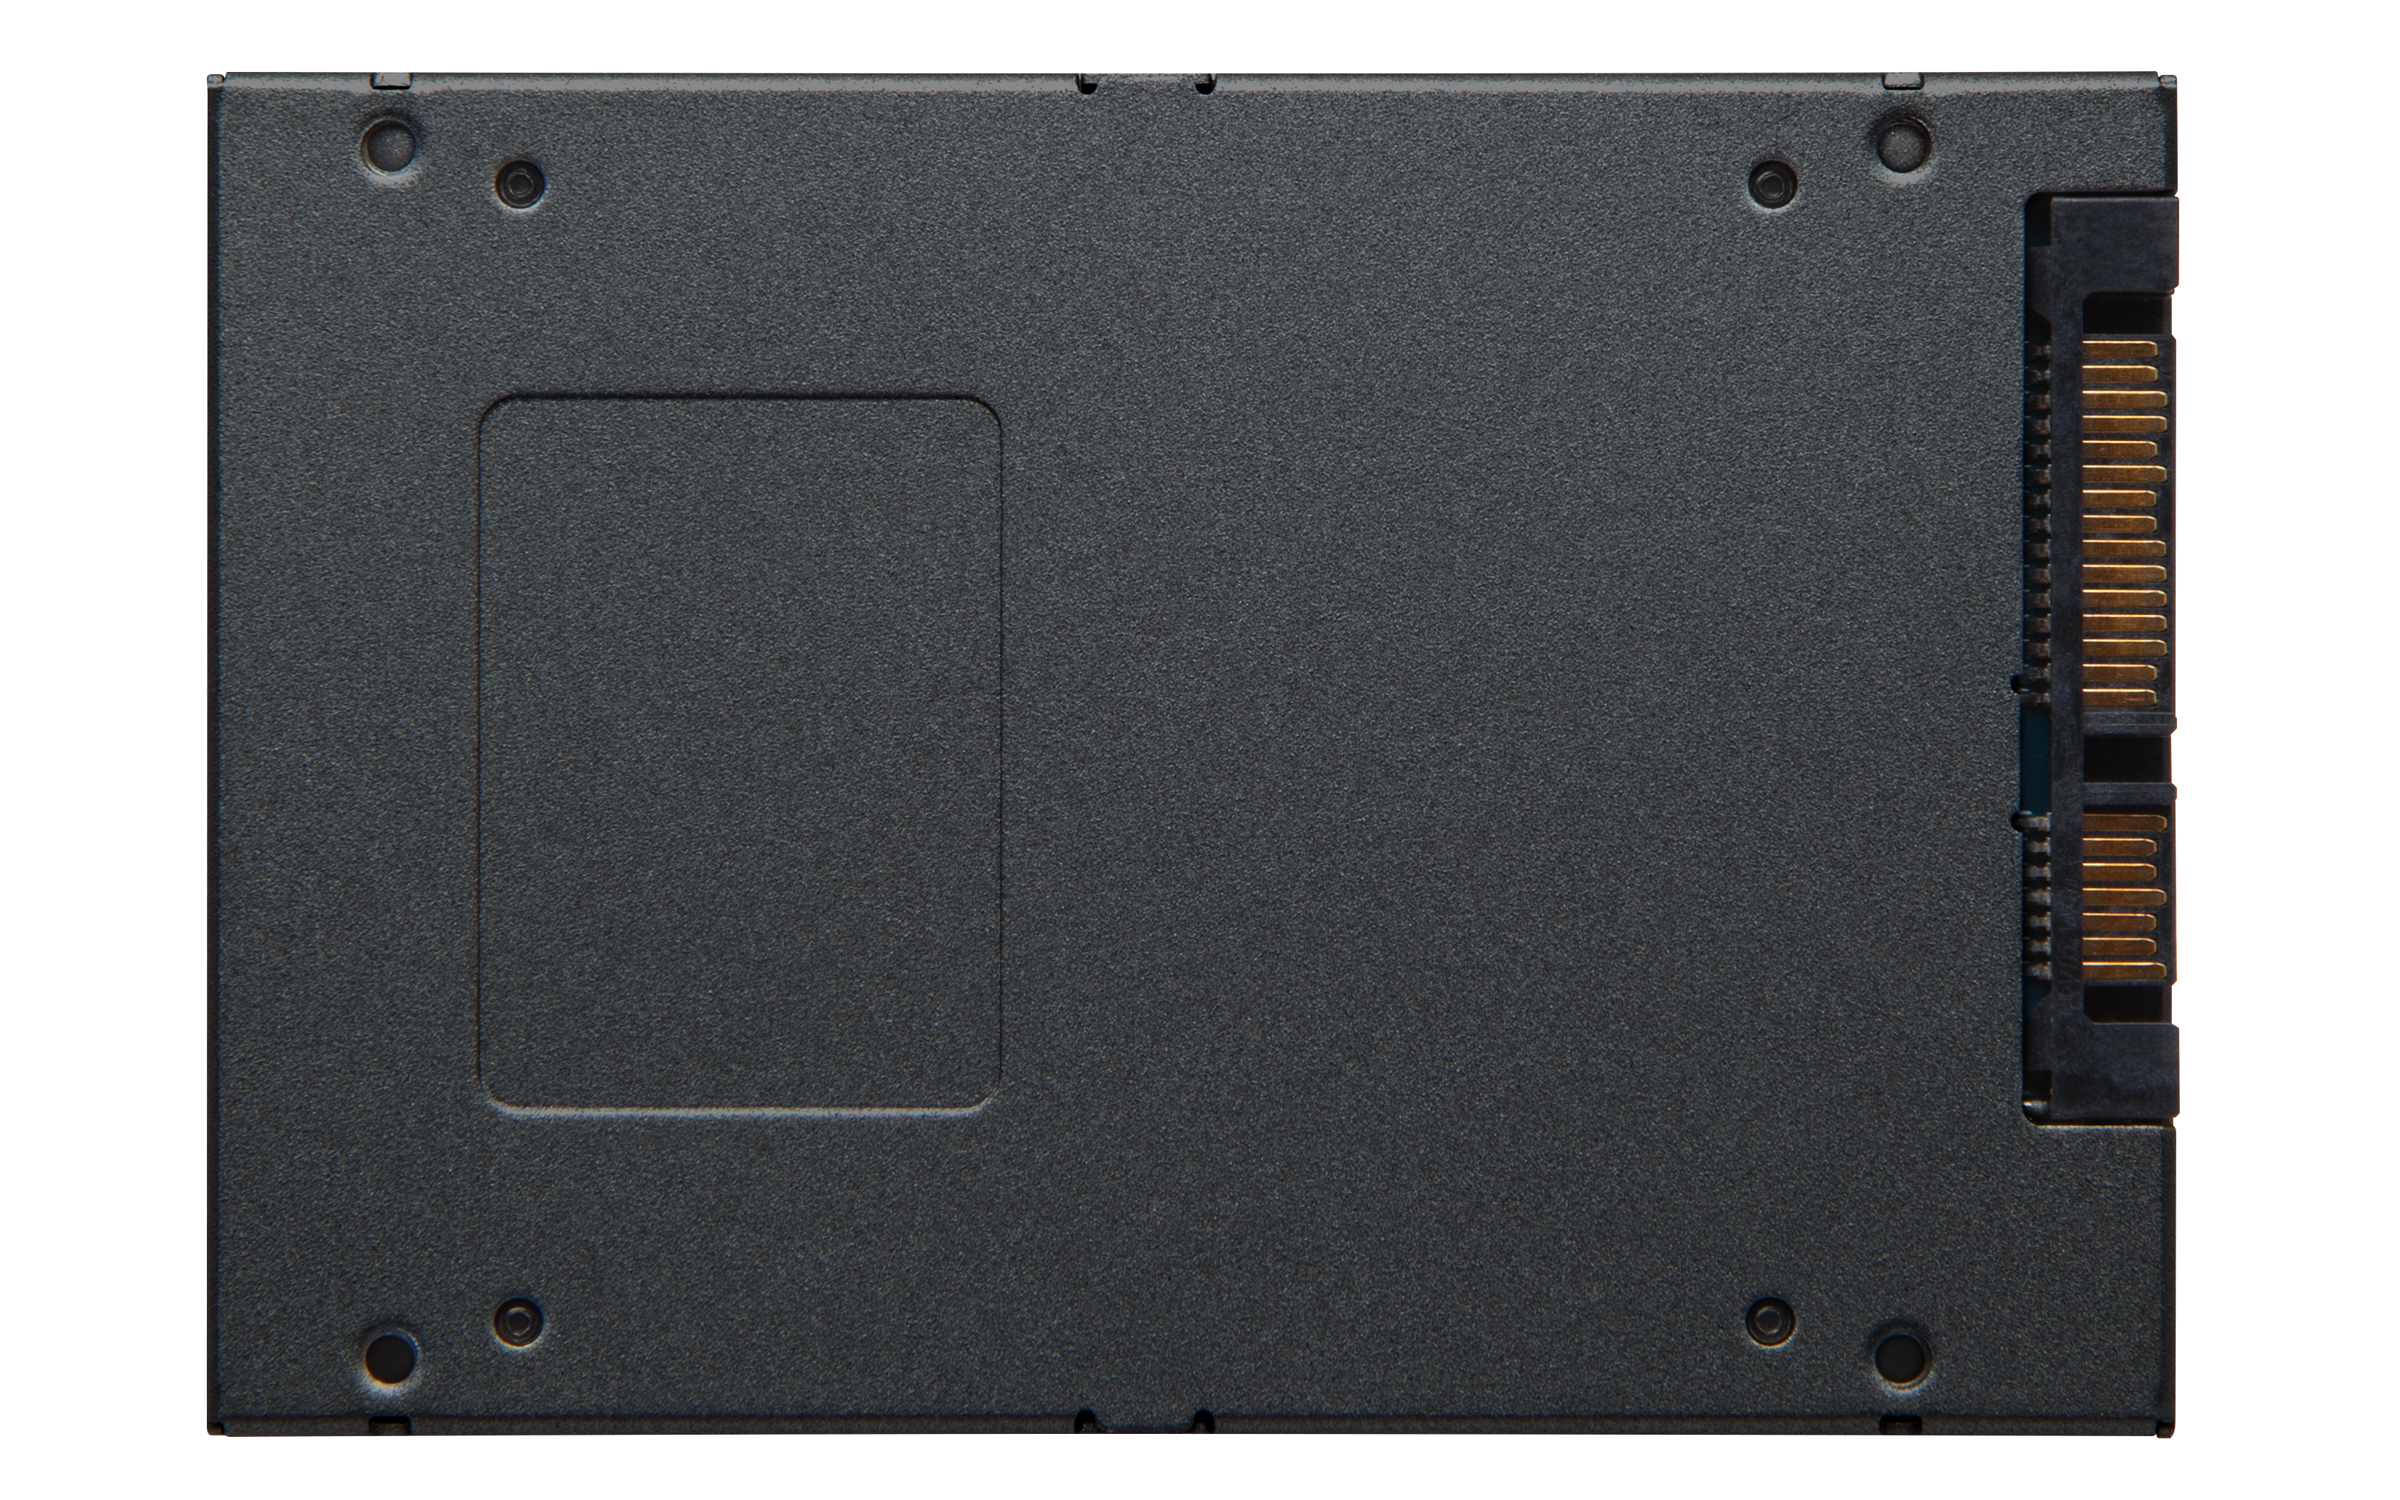 KINGSTON SSD A400 240GB 2.5